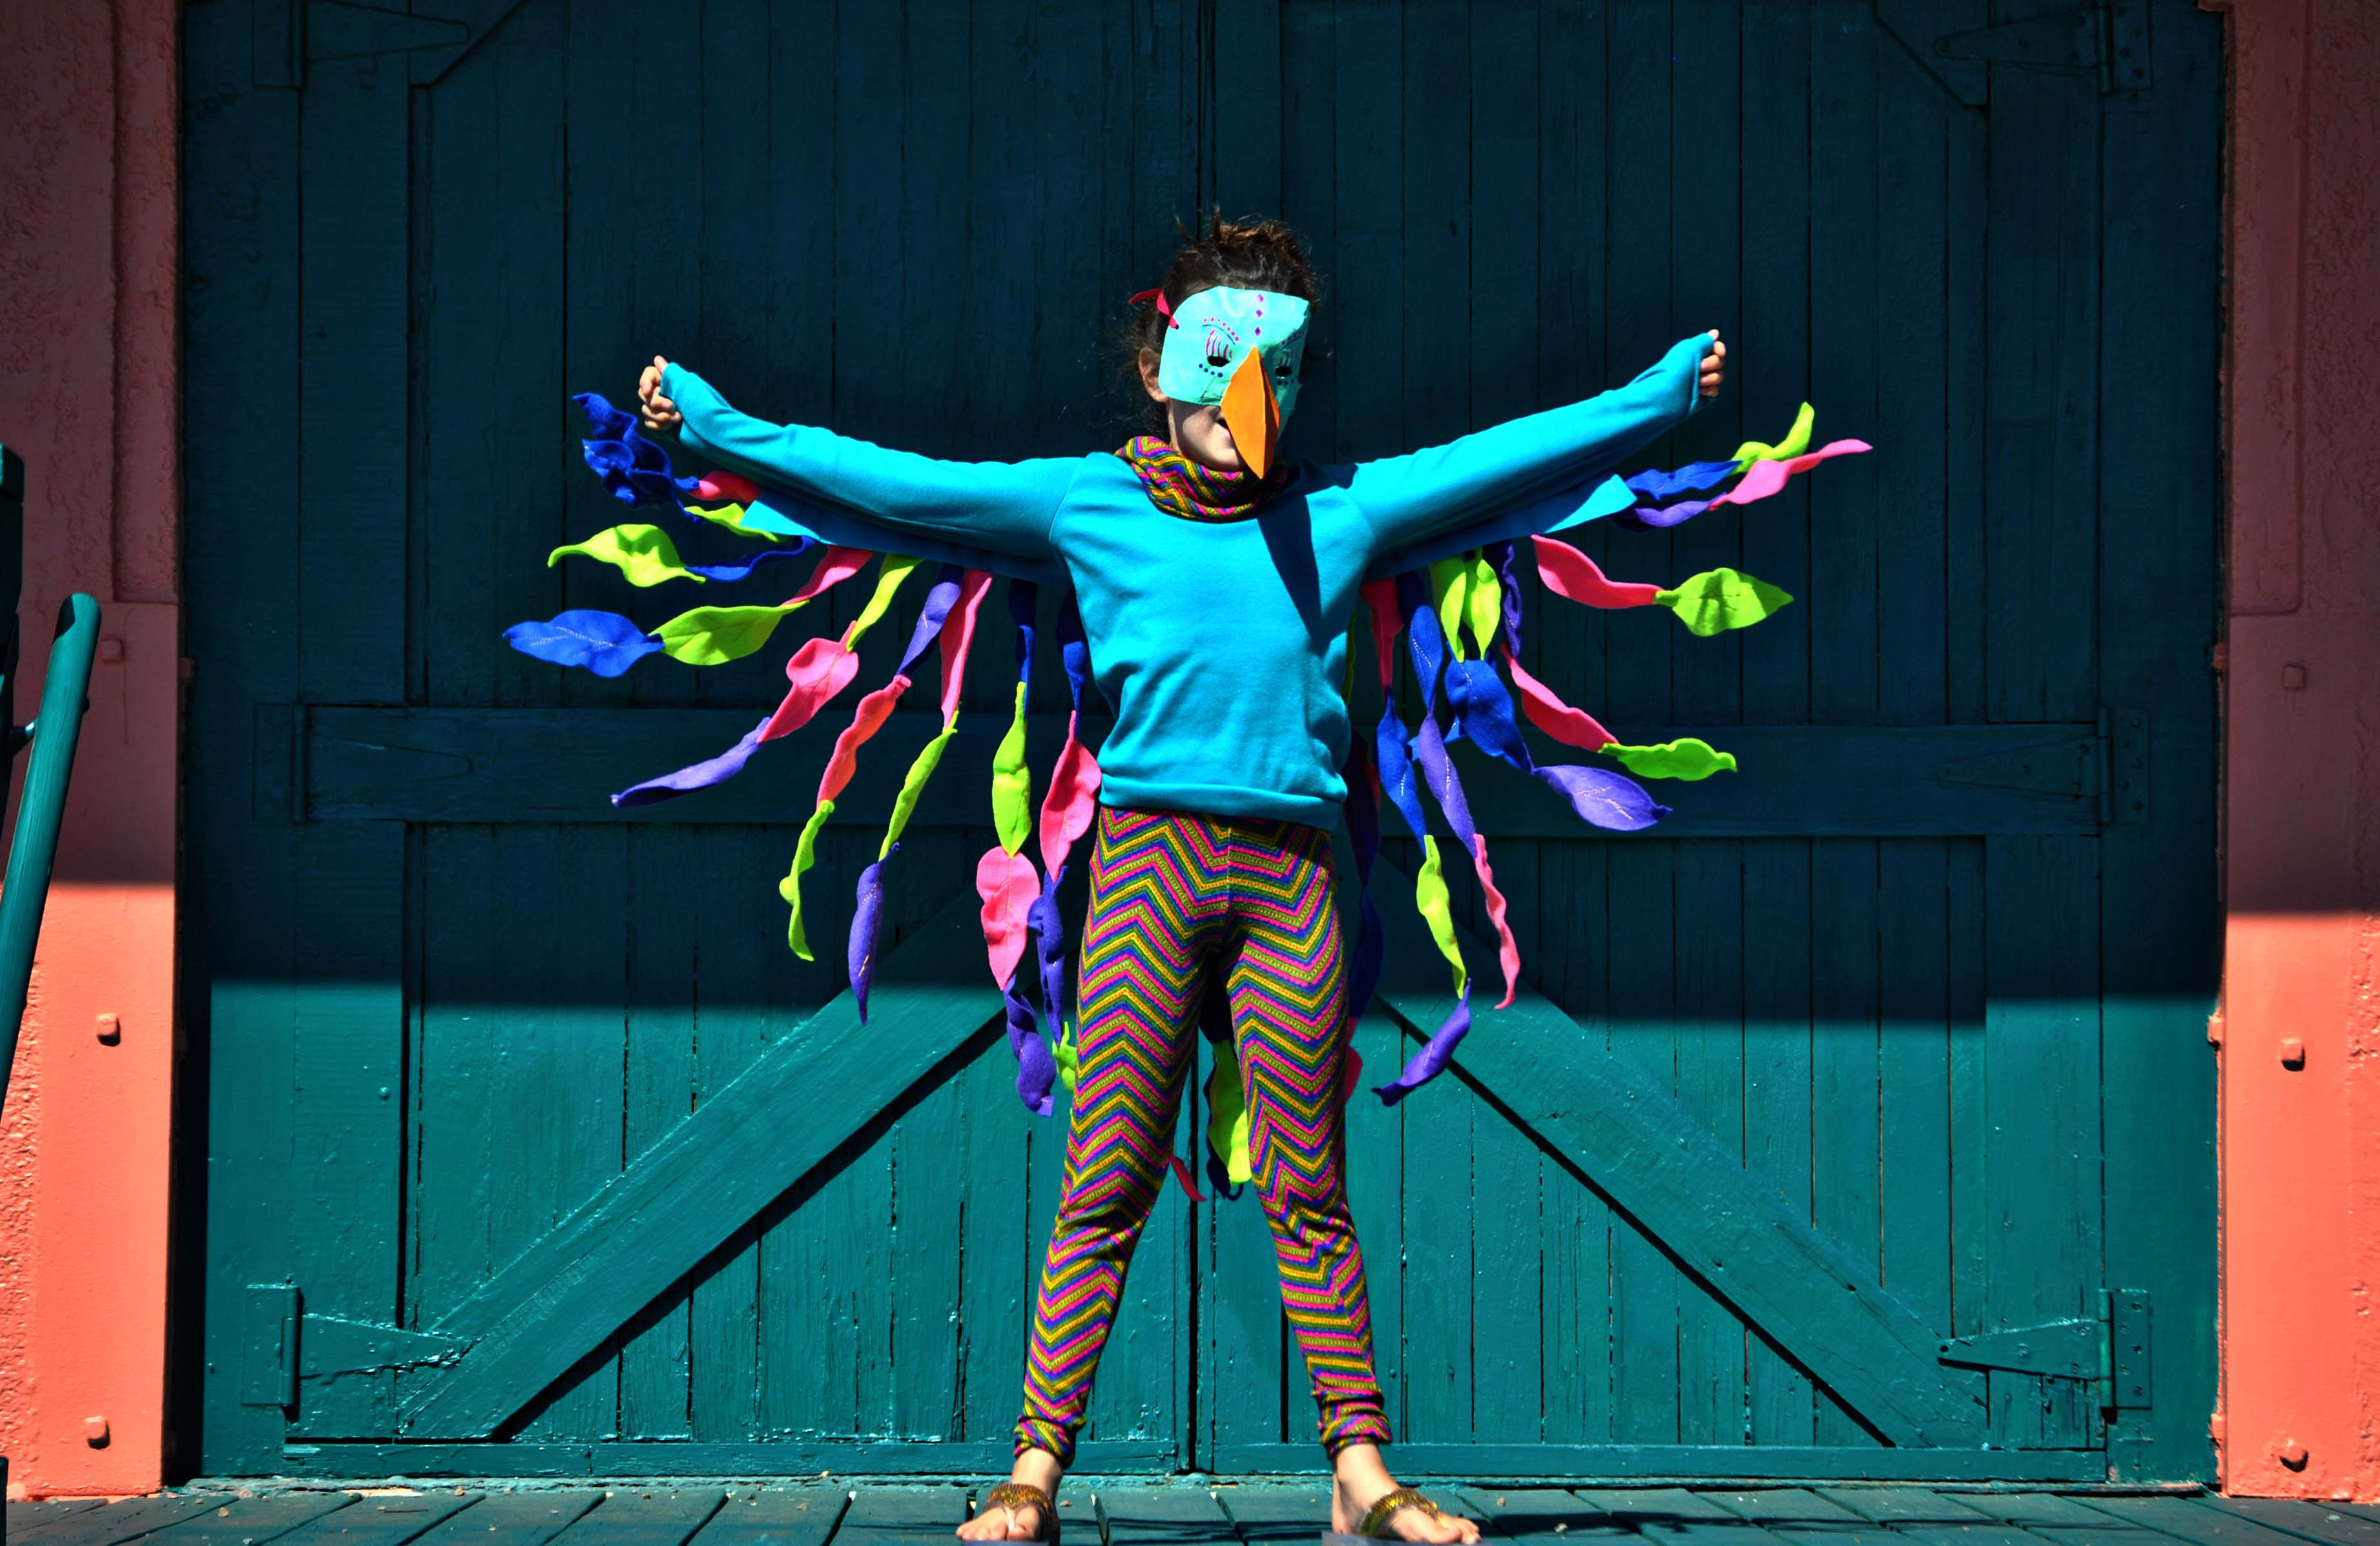 Best ideas about DIY Bird Costume
. Save or Pin Bird Costume Dandelion Drift Now.